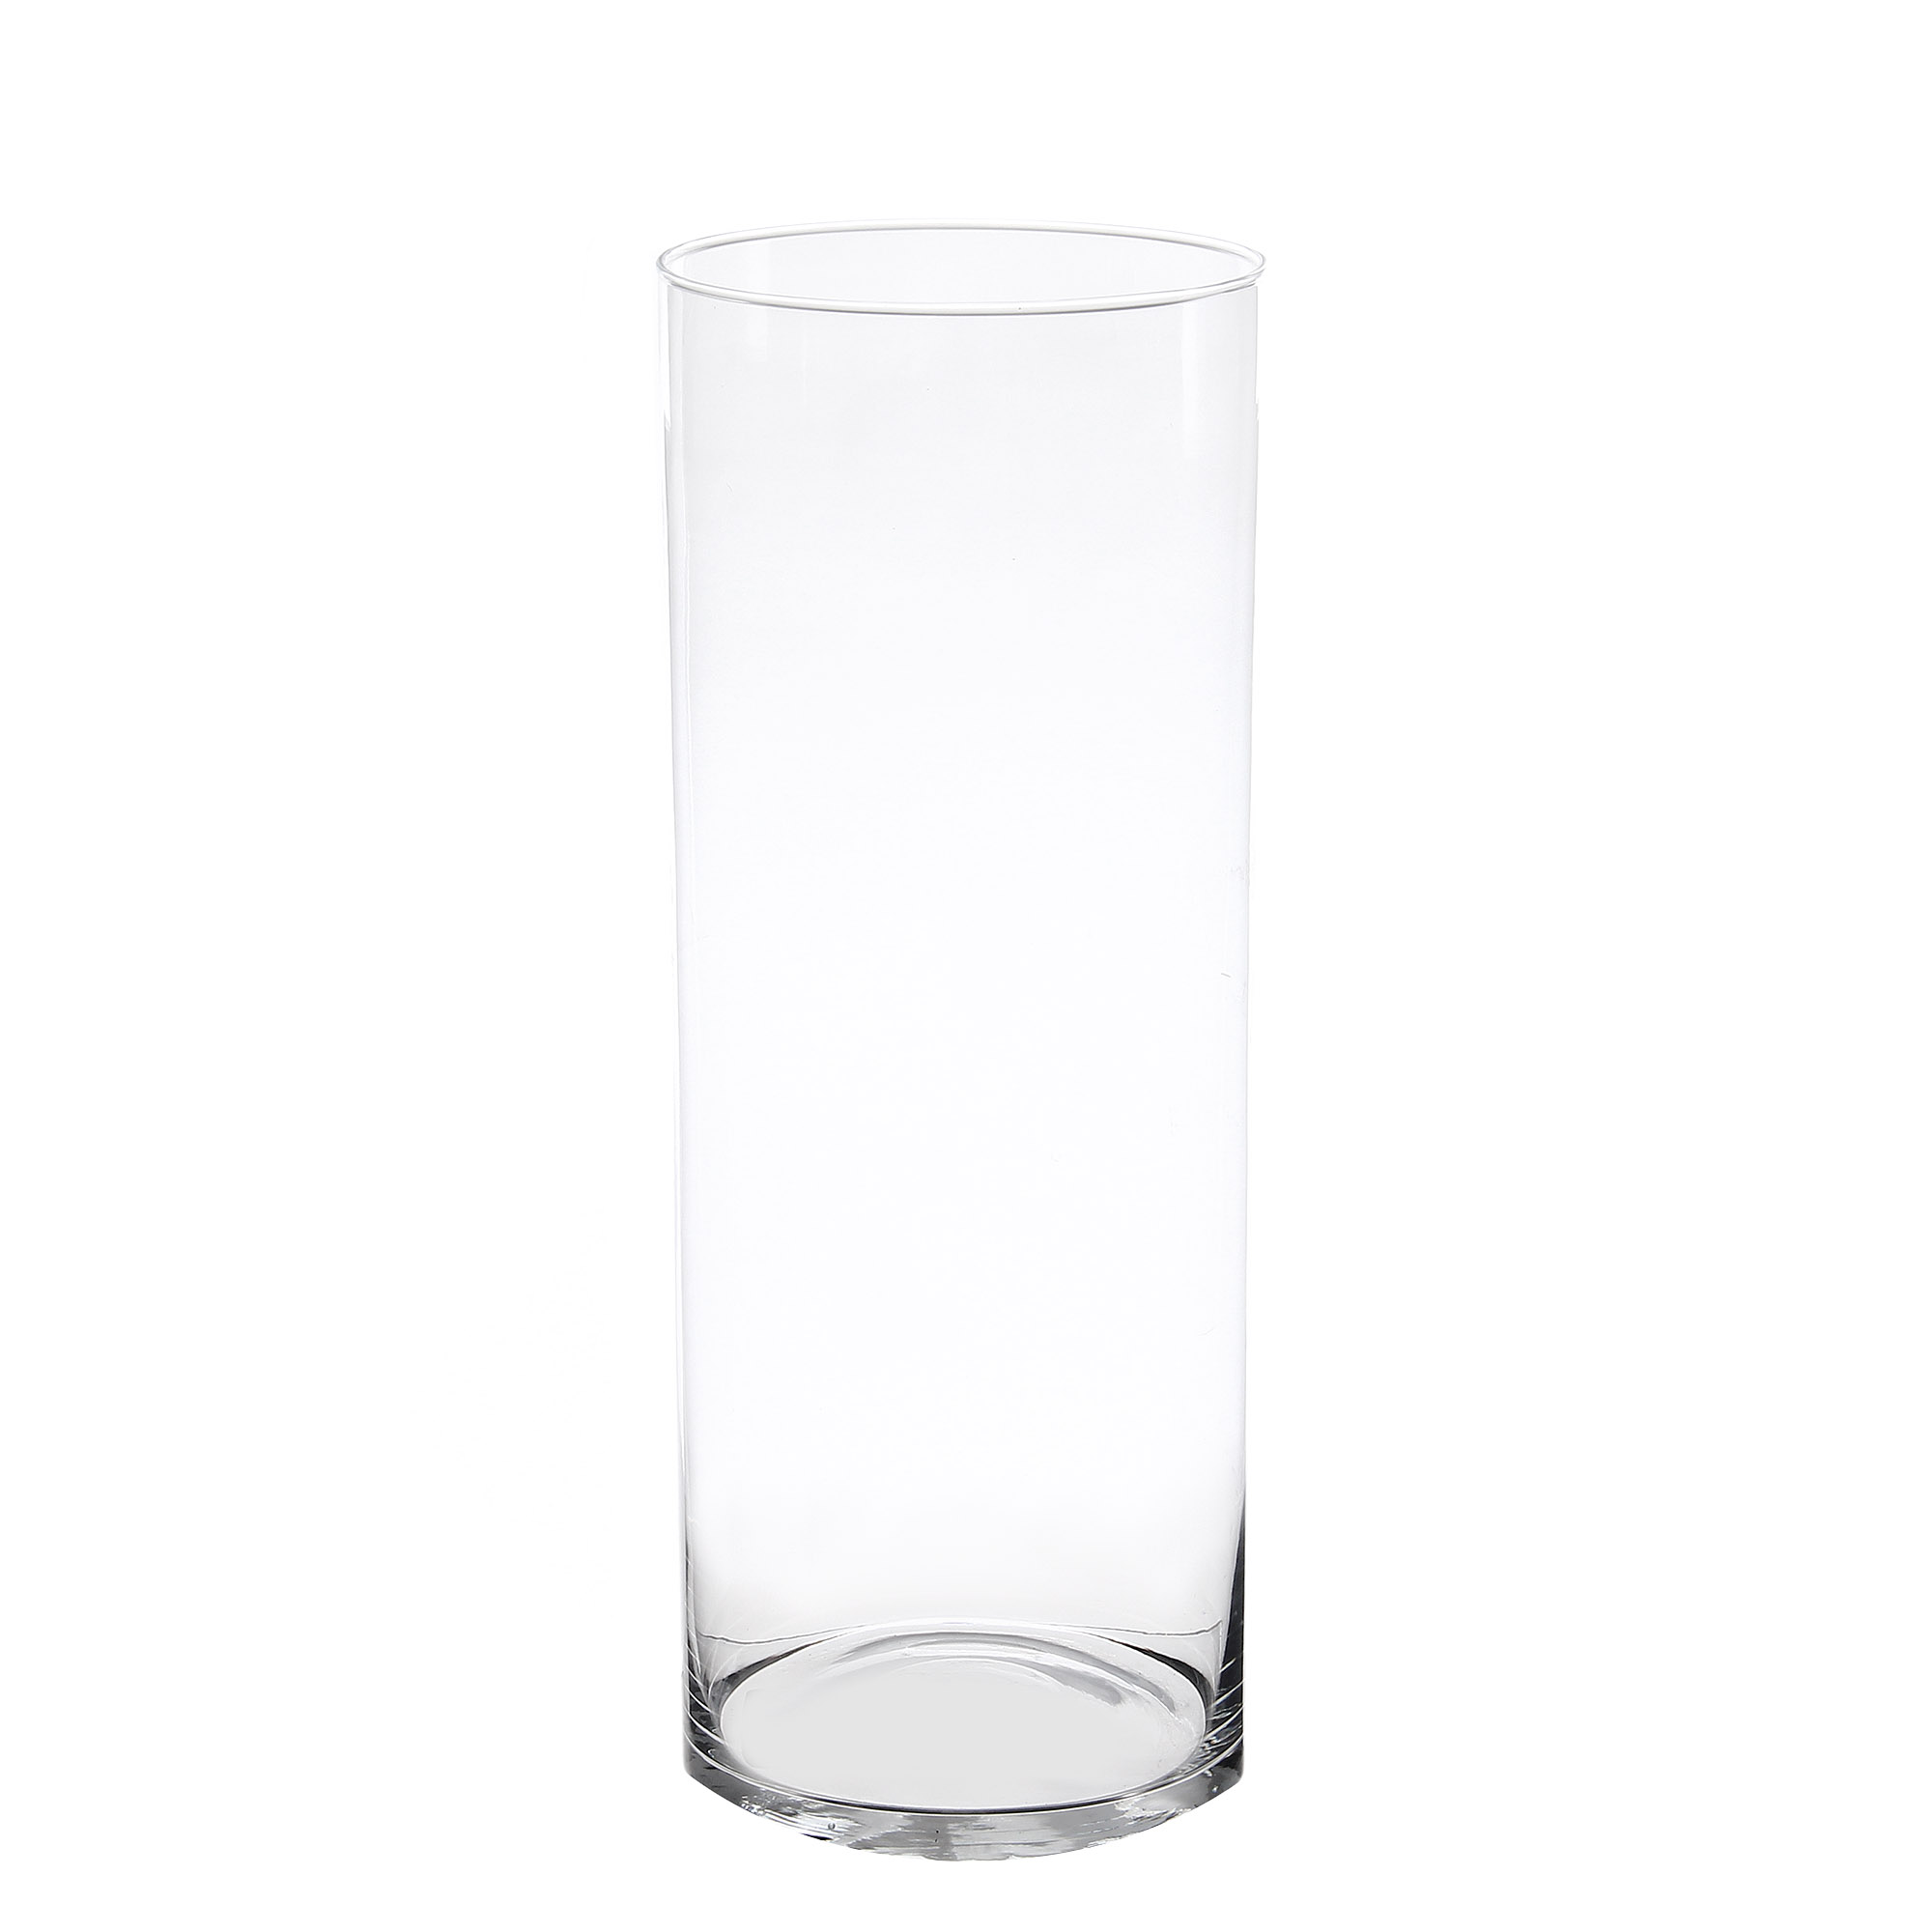 Ваза Hakbijl glass cylinder hc 40см